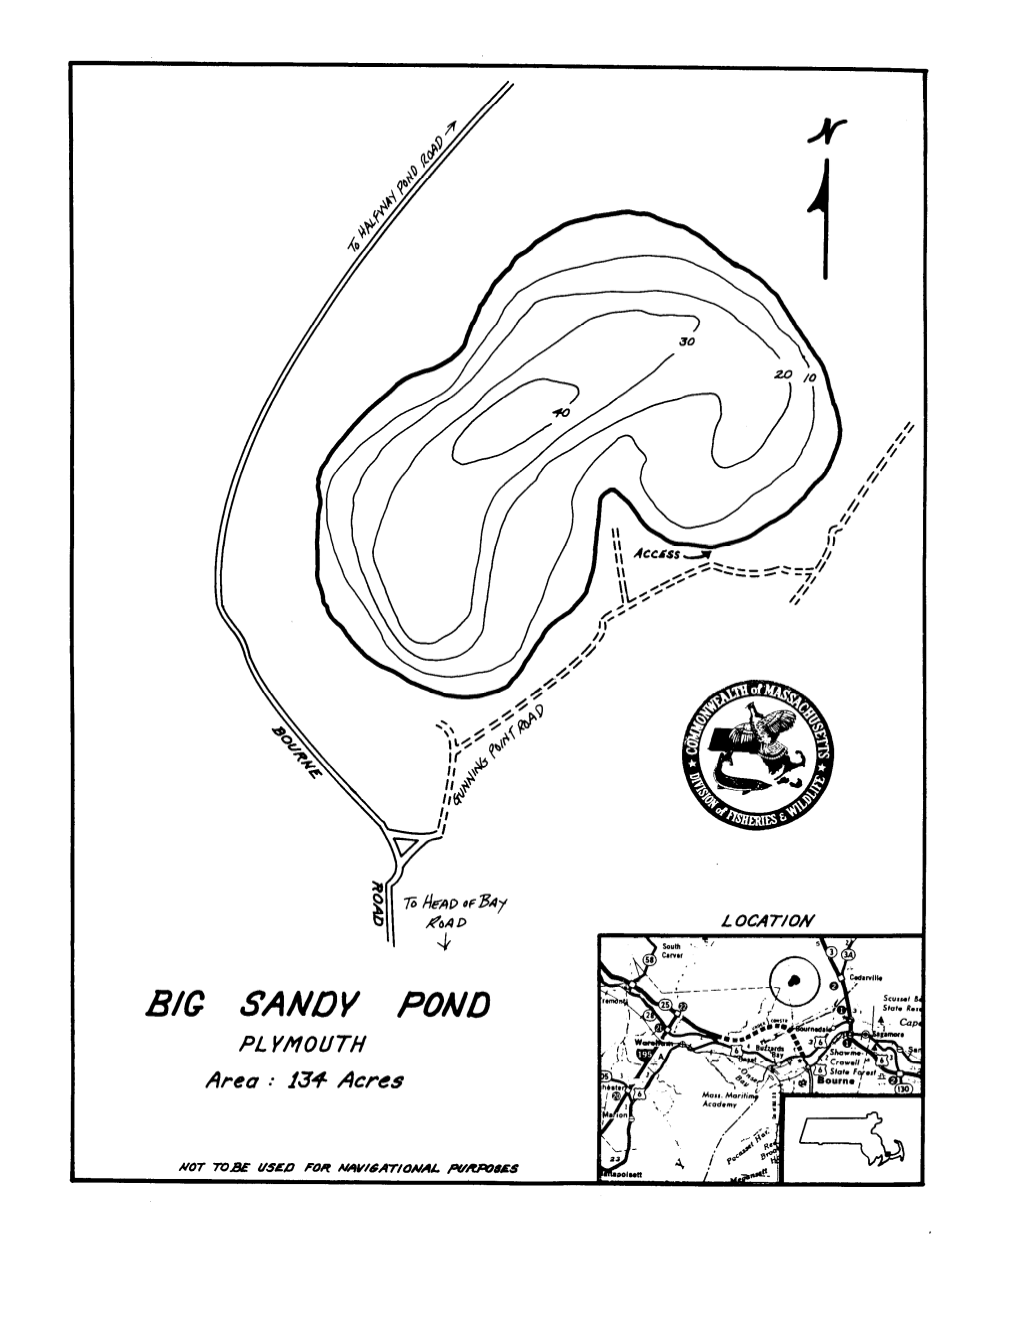 Primary Gamefish: Trout Big Sandy Pond